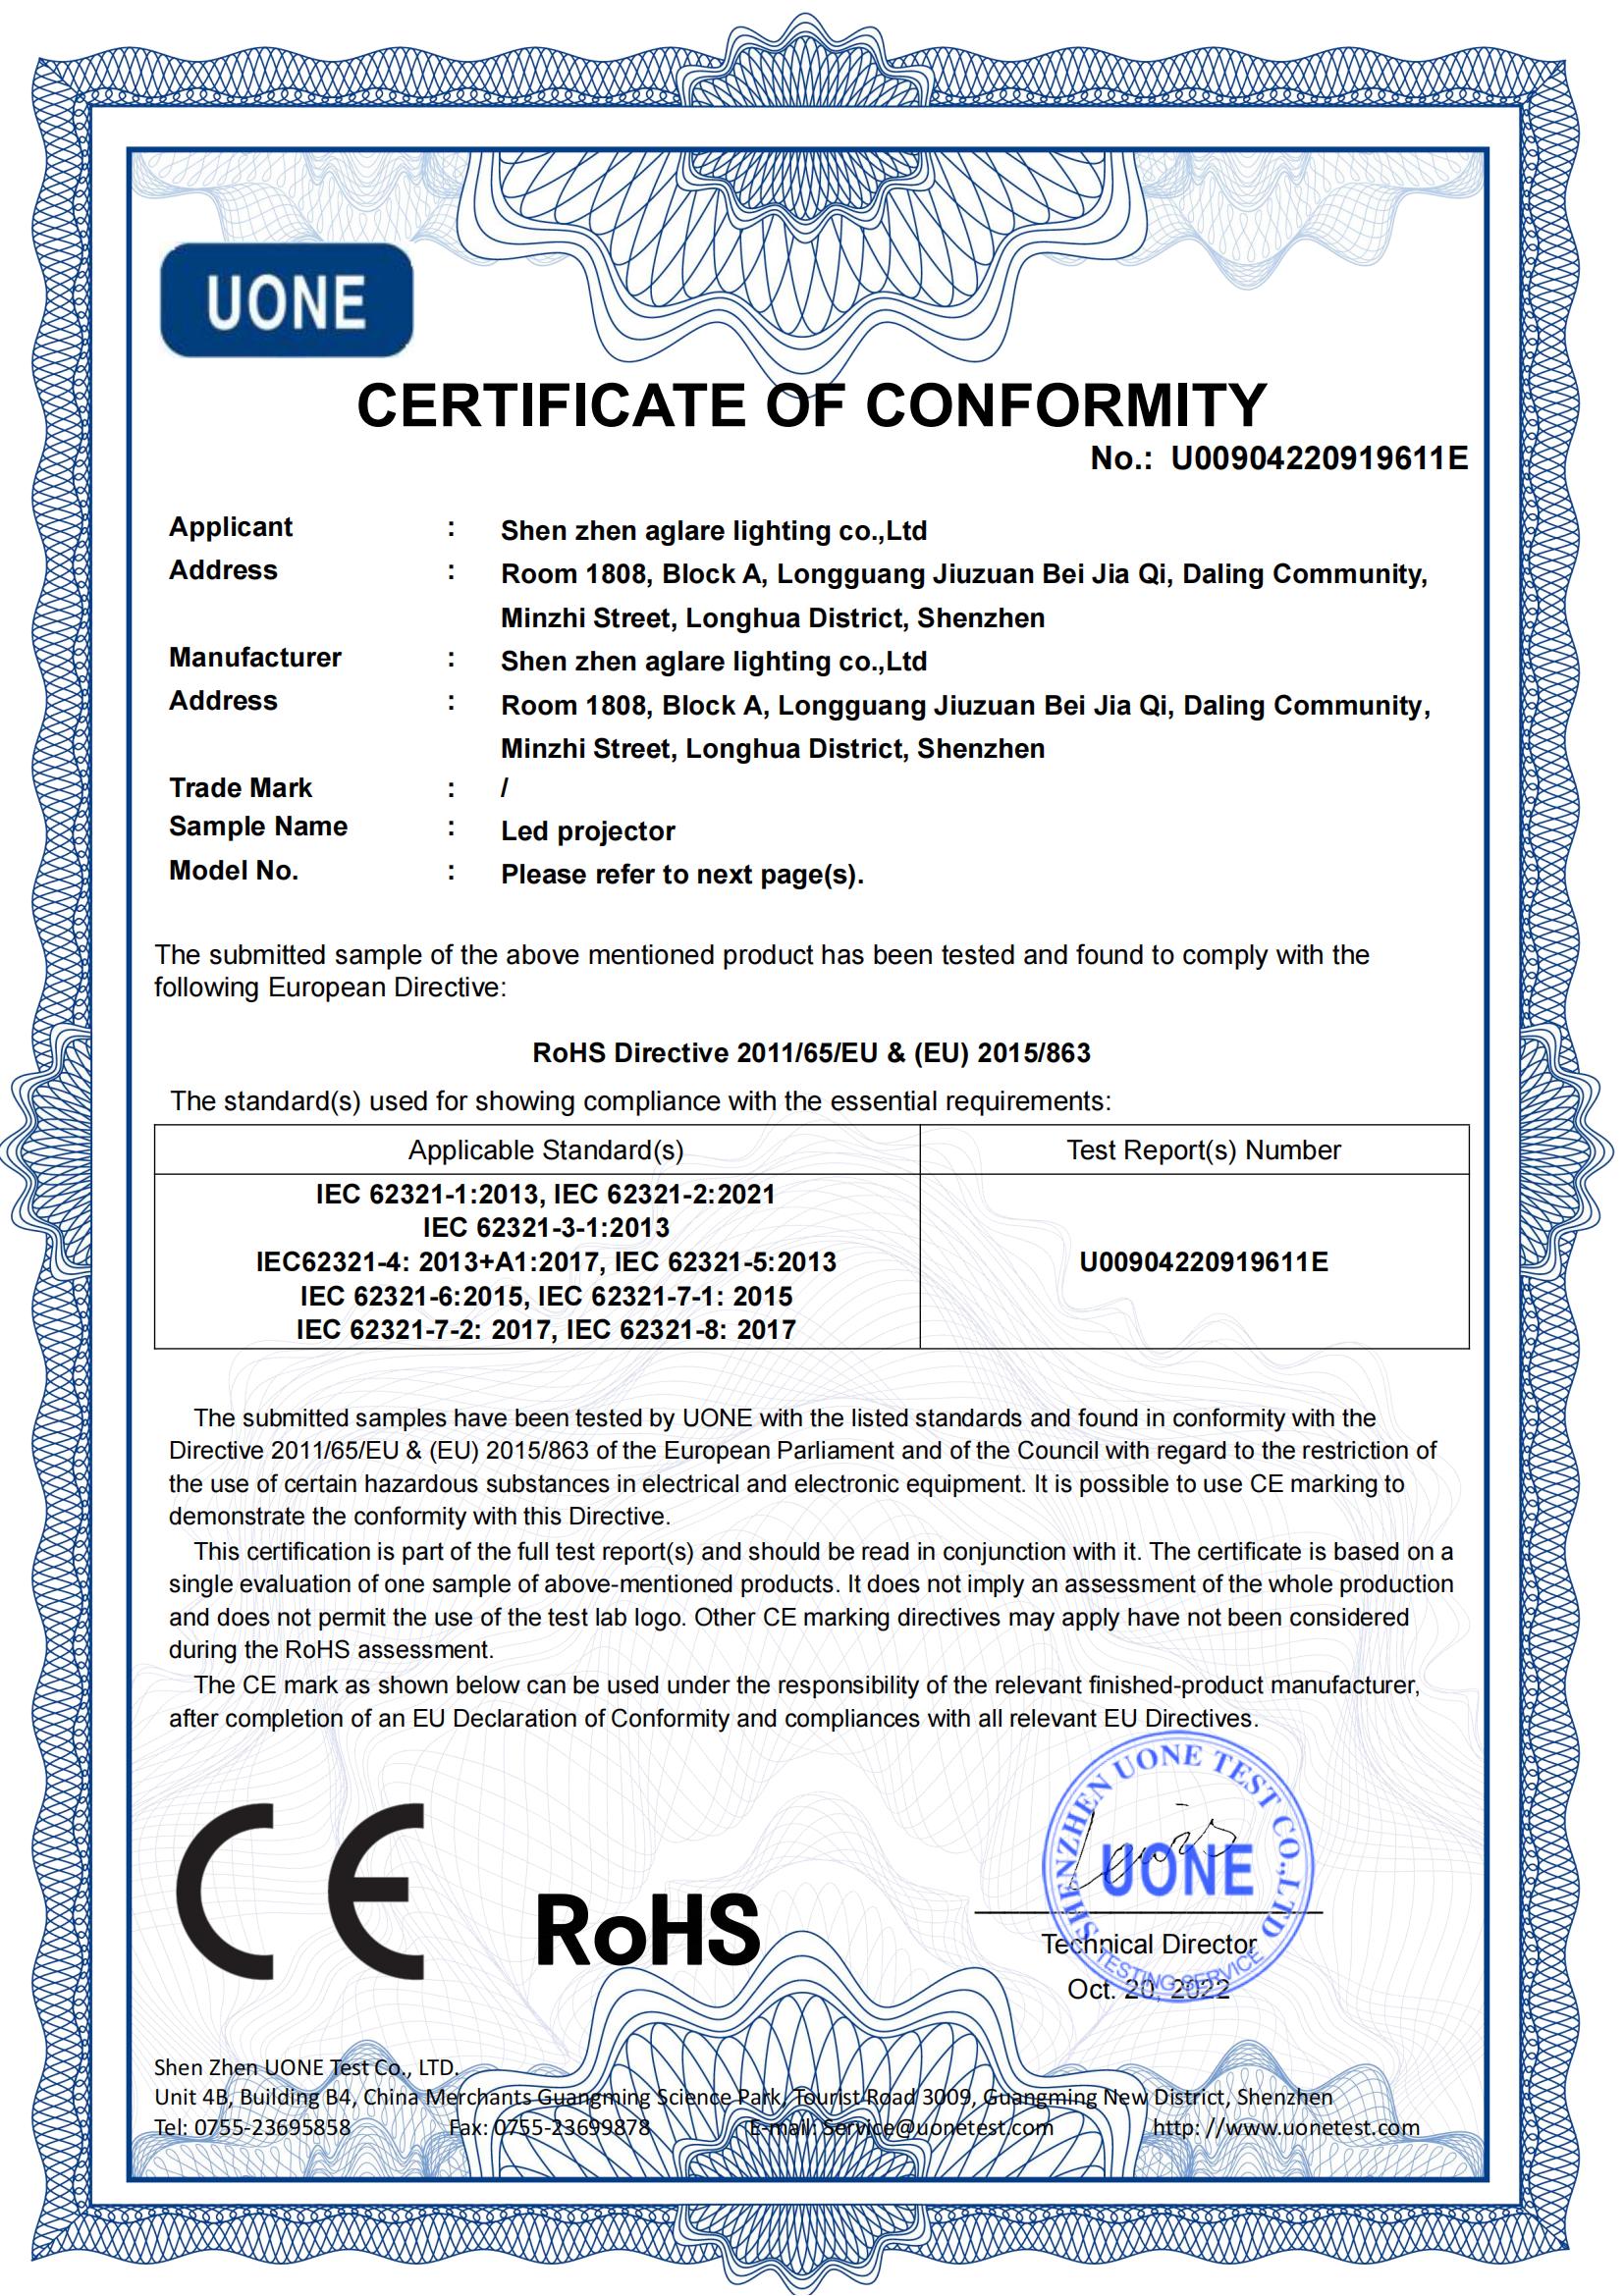 Aglare RGB flood lights pass ROHS certification Successfully!